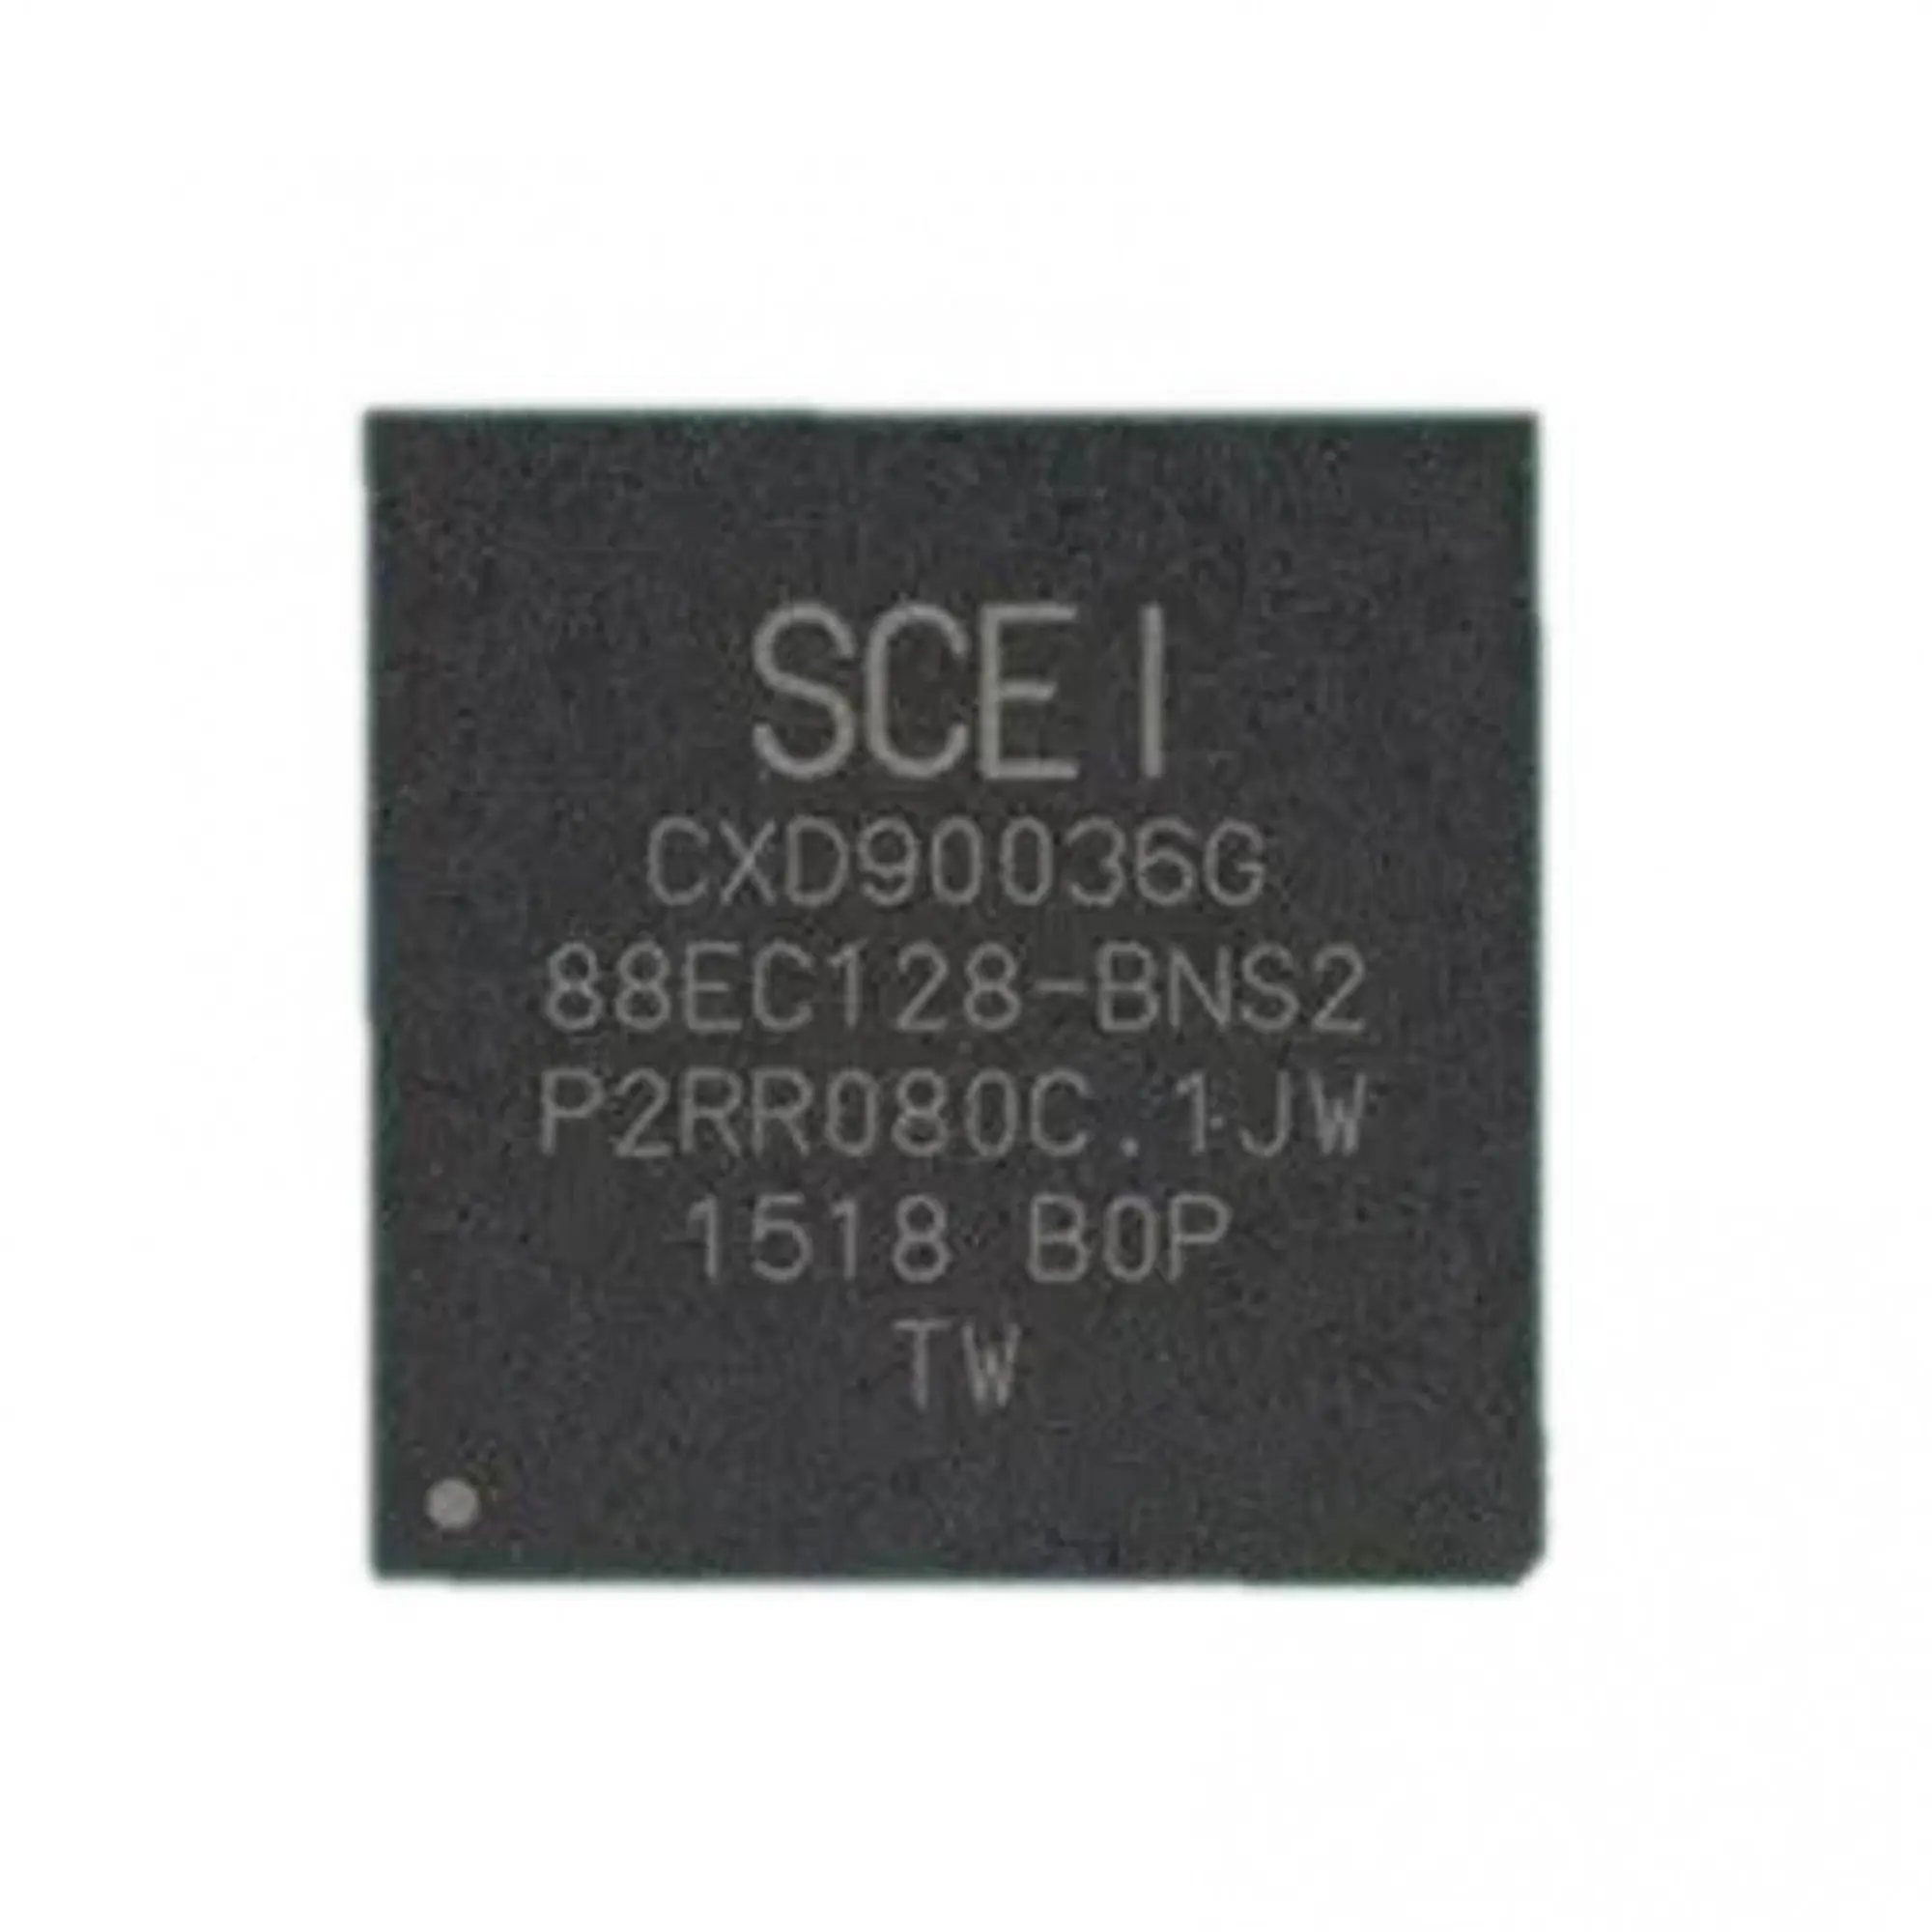 Фото 5 шт. SCEI CXD90036G Southbridge IC чипы замена для Playstation 4 PS4 CUH-1200 | Электроника